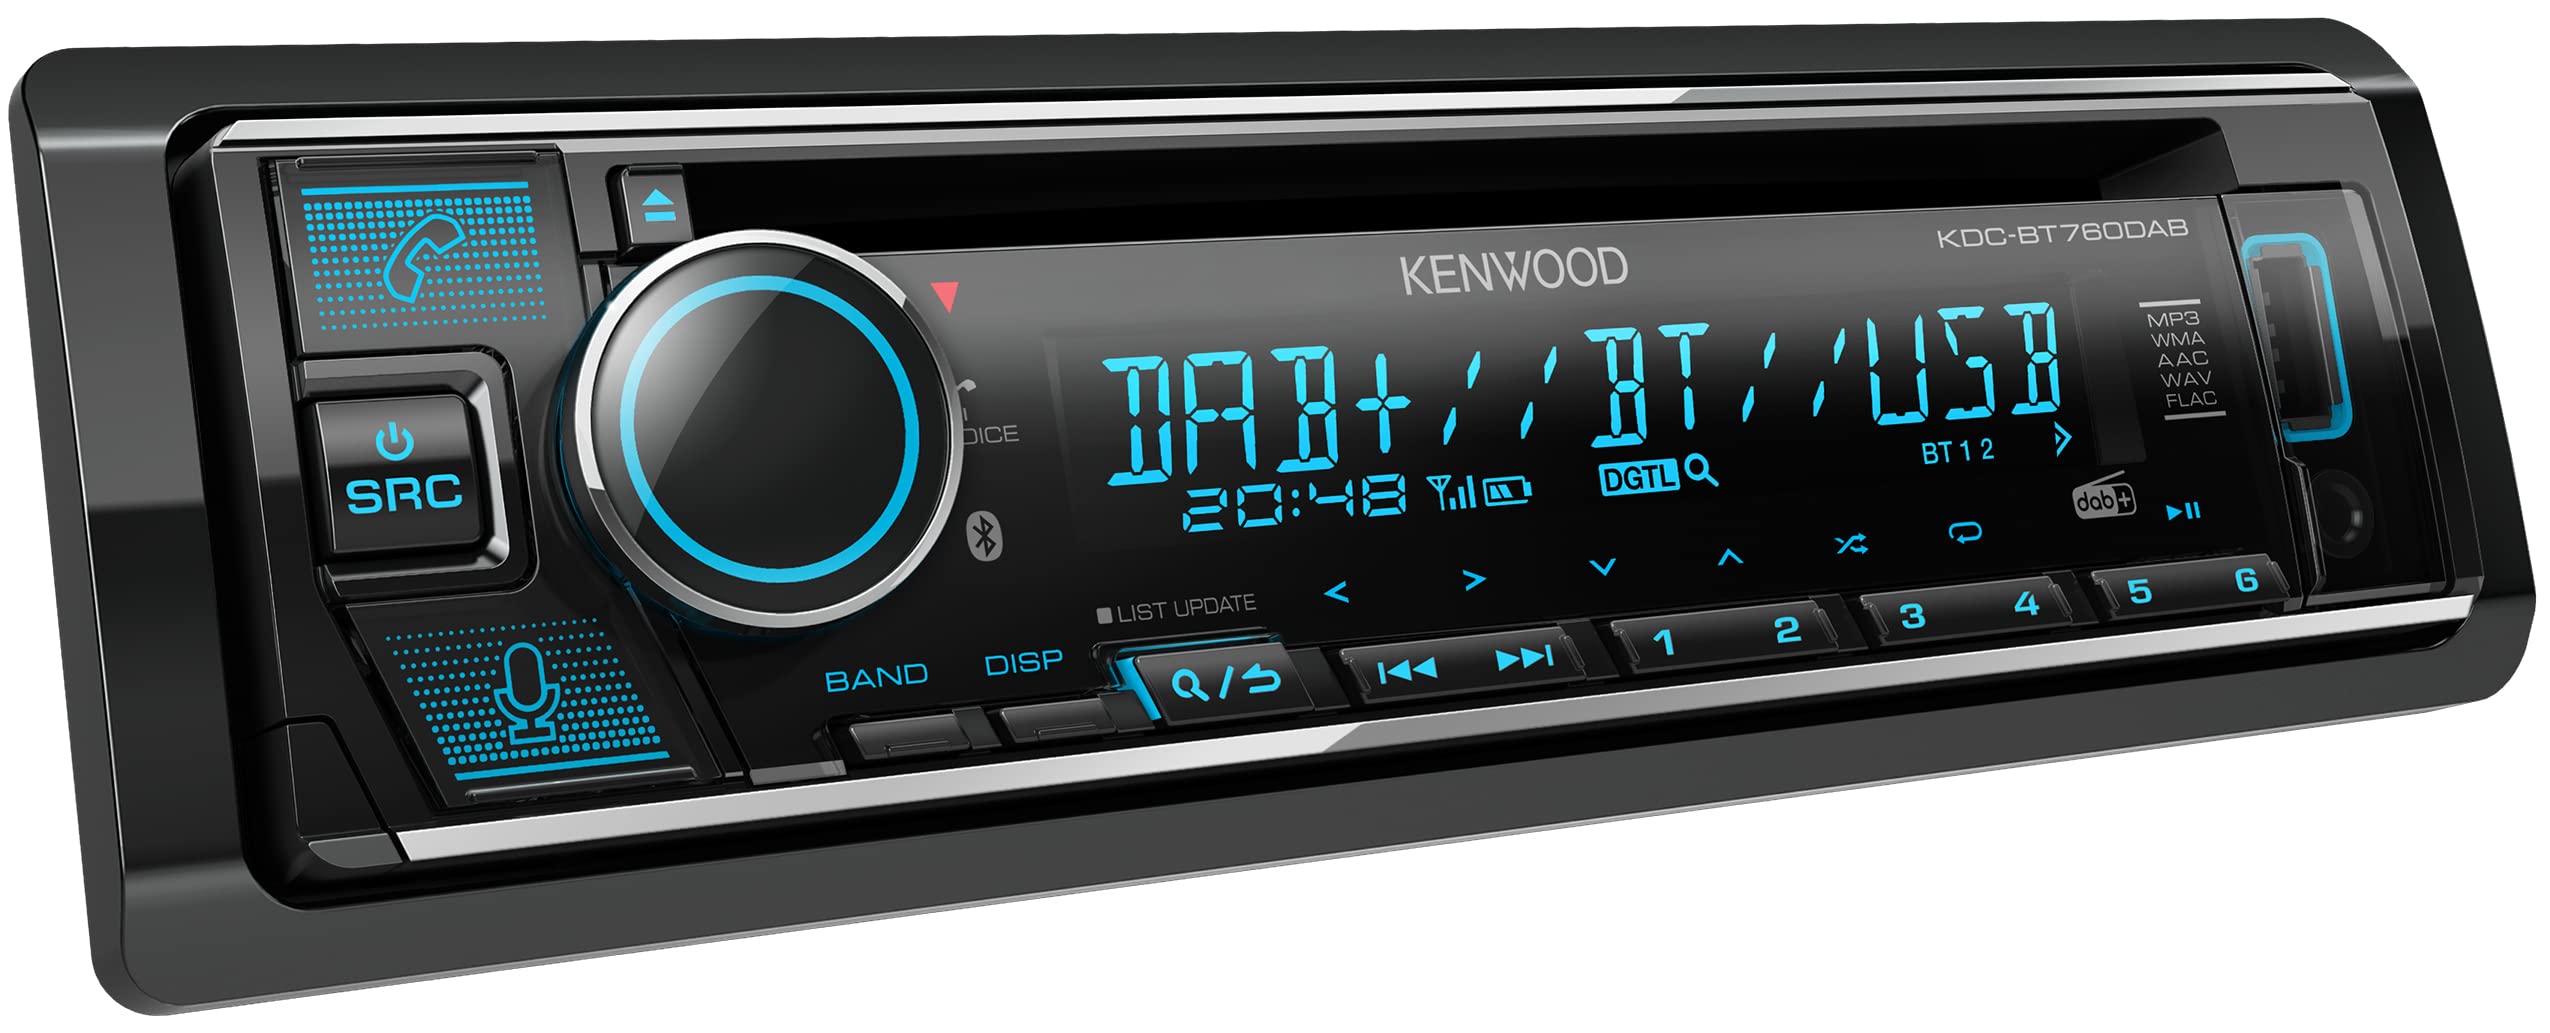 Kenwood KDC-BT760DAB CD-Autoradio mit DAB+ & Bluetooth Freisprecheinrichtung (USB, AUX-In, 2 x Pre-Out 2.5V, Amazon Alexa, Soundprozessor, 4x50 W, VAR. Beleuchtung, Antenne)